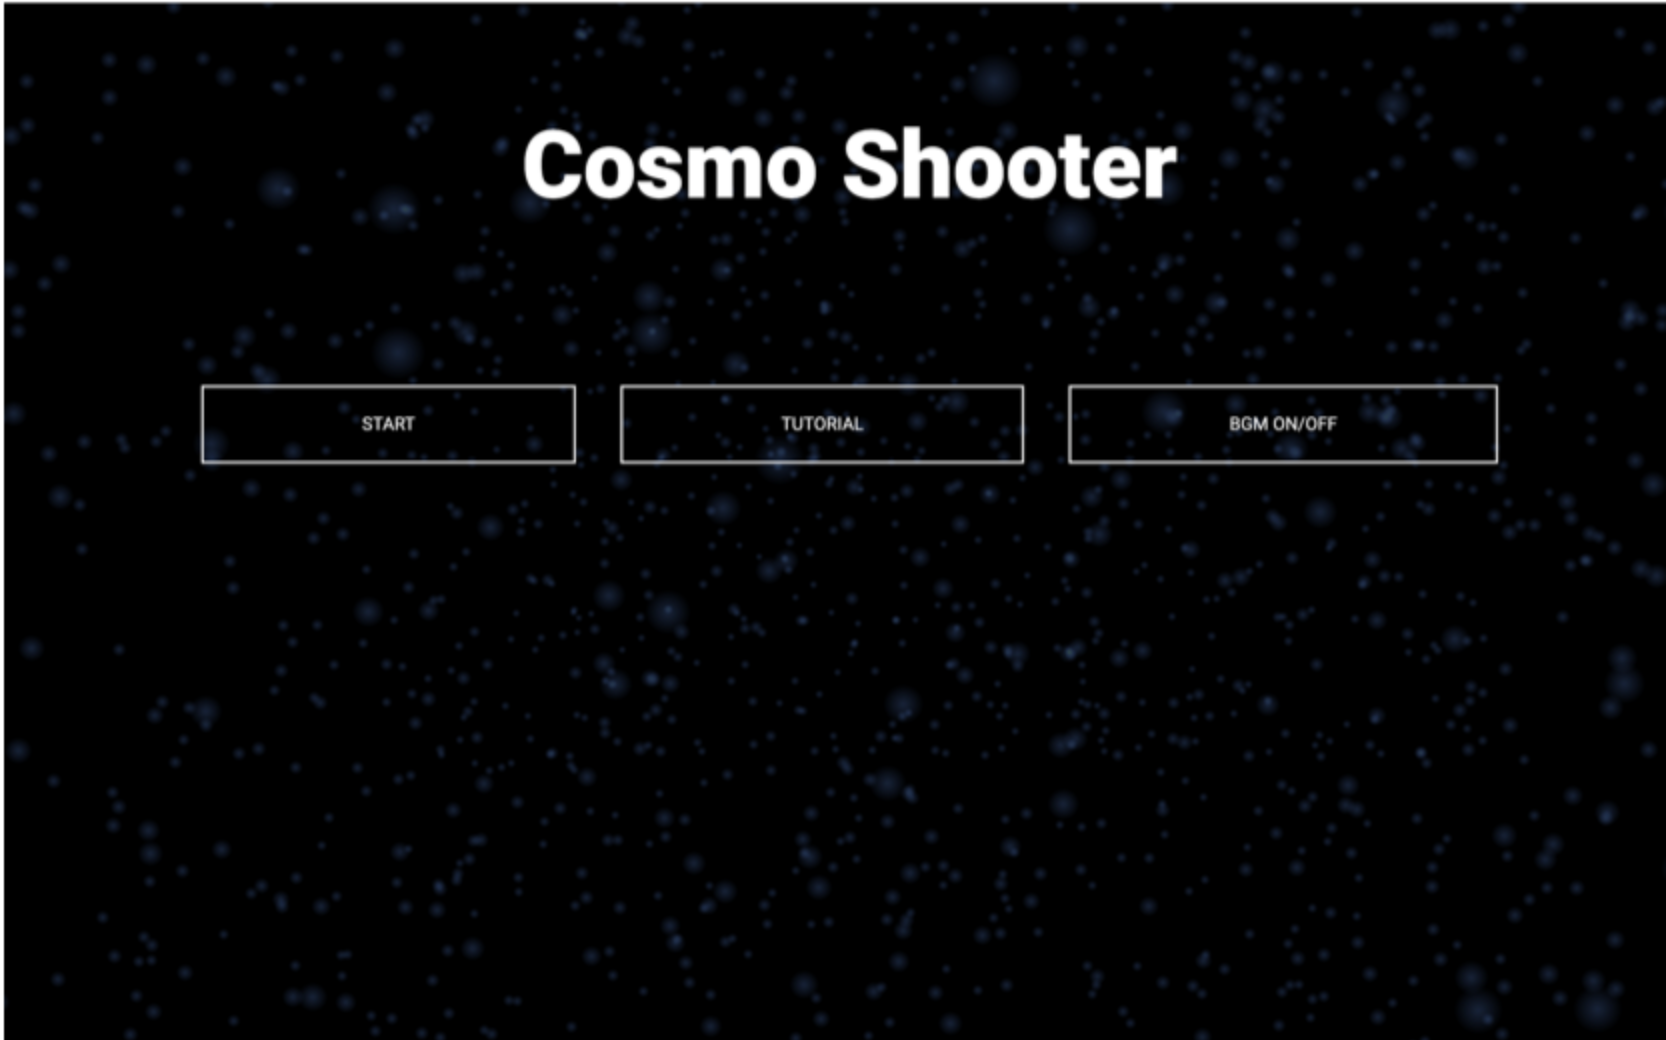 Cosmo Shooter